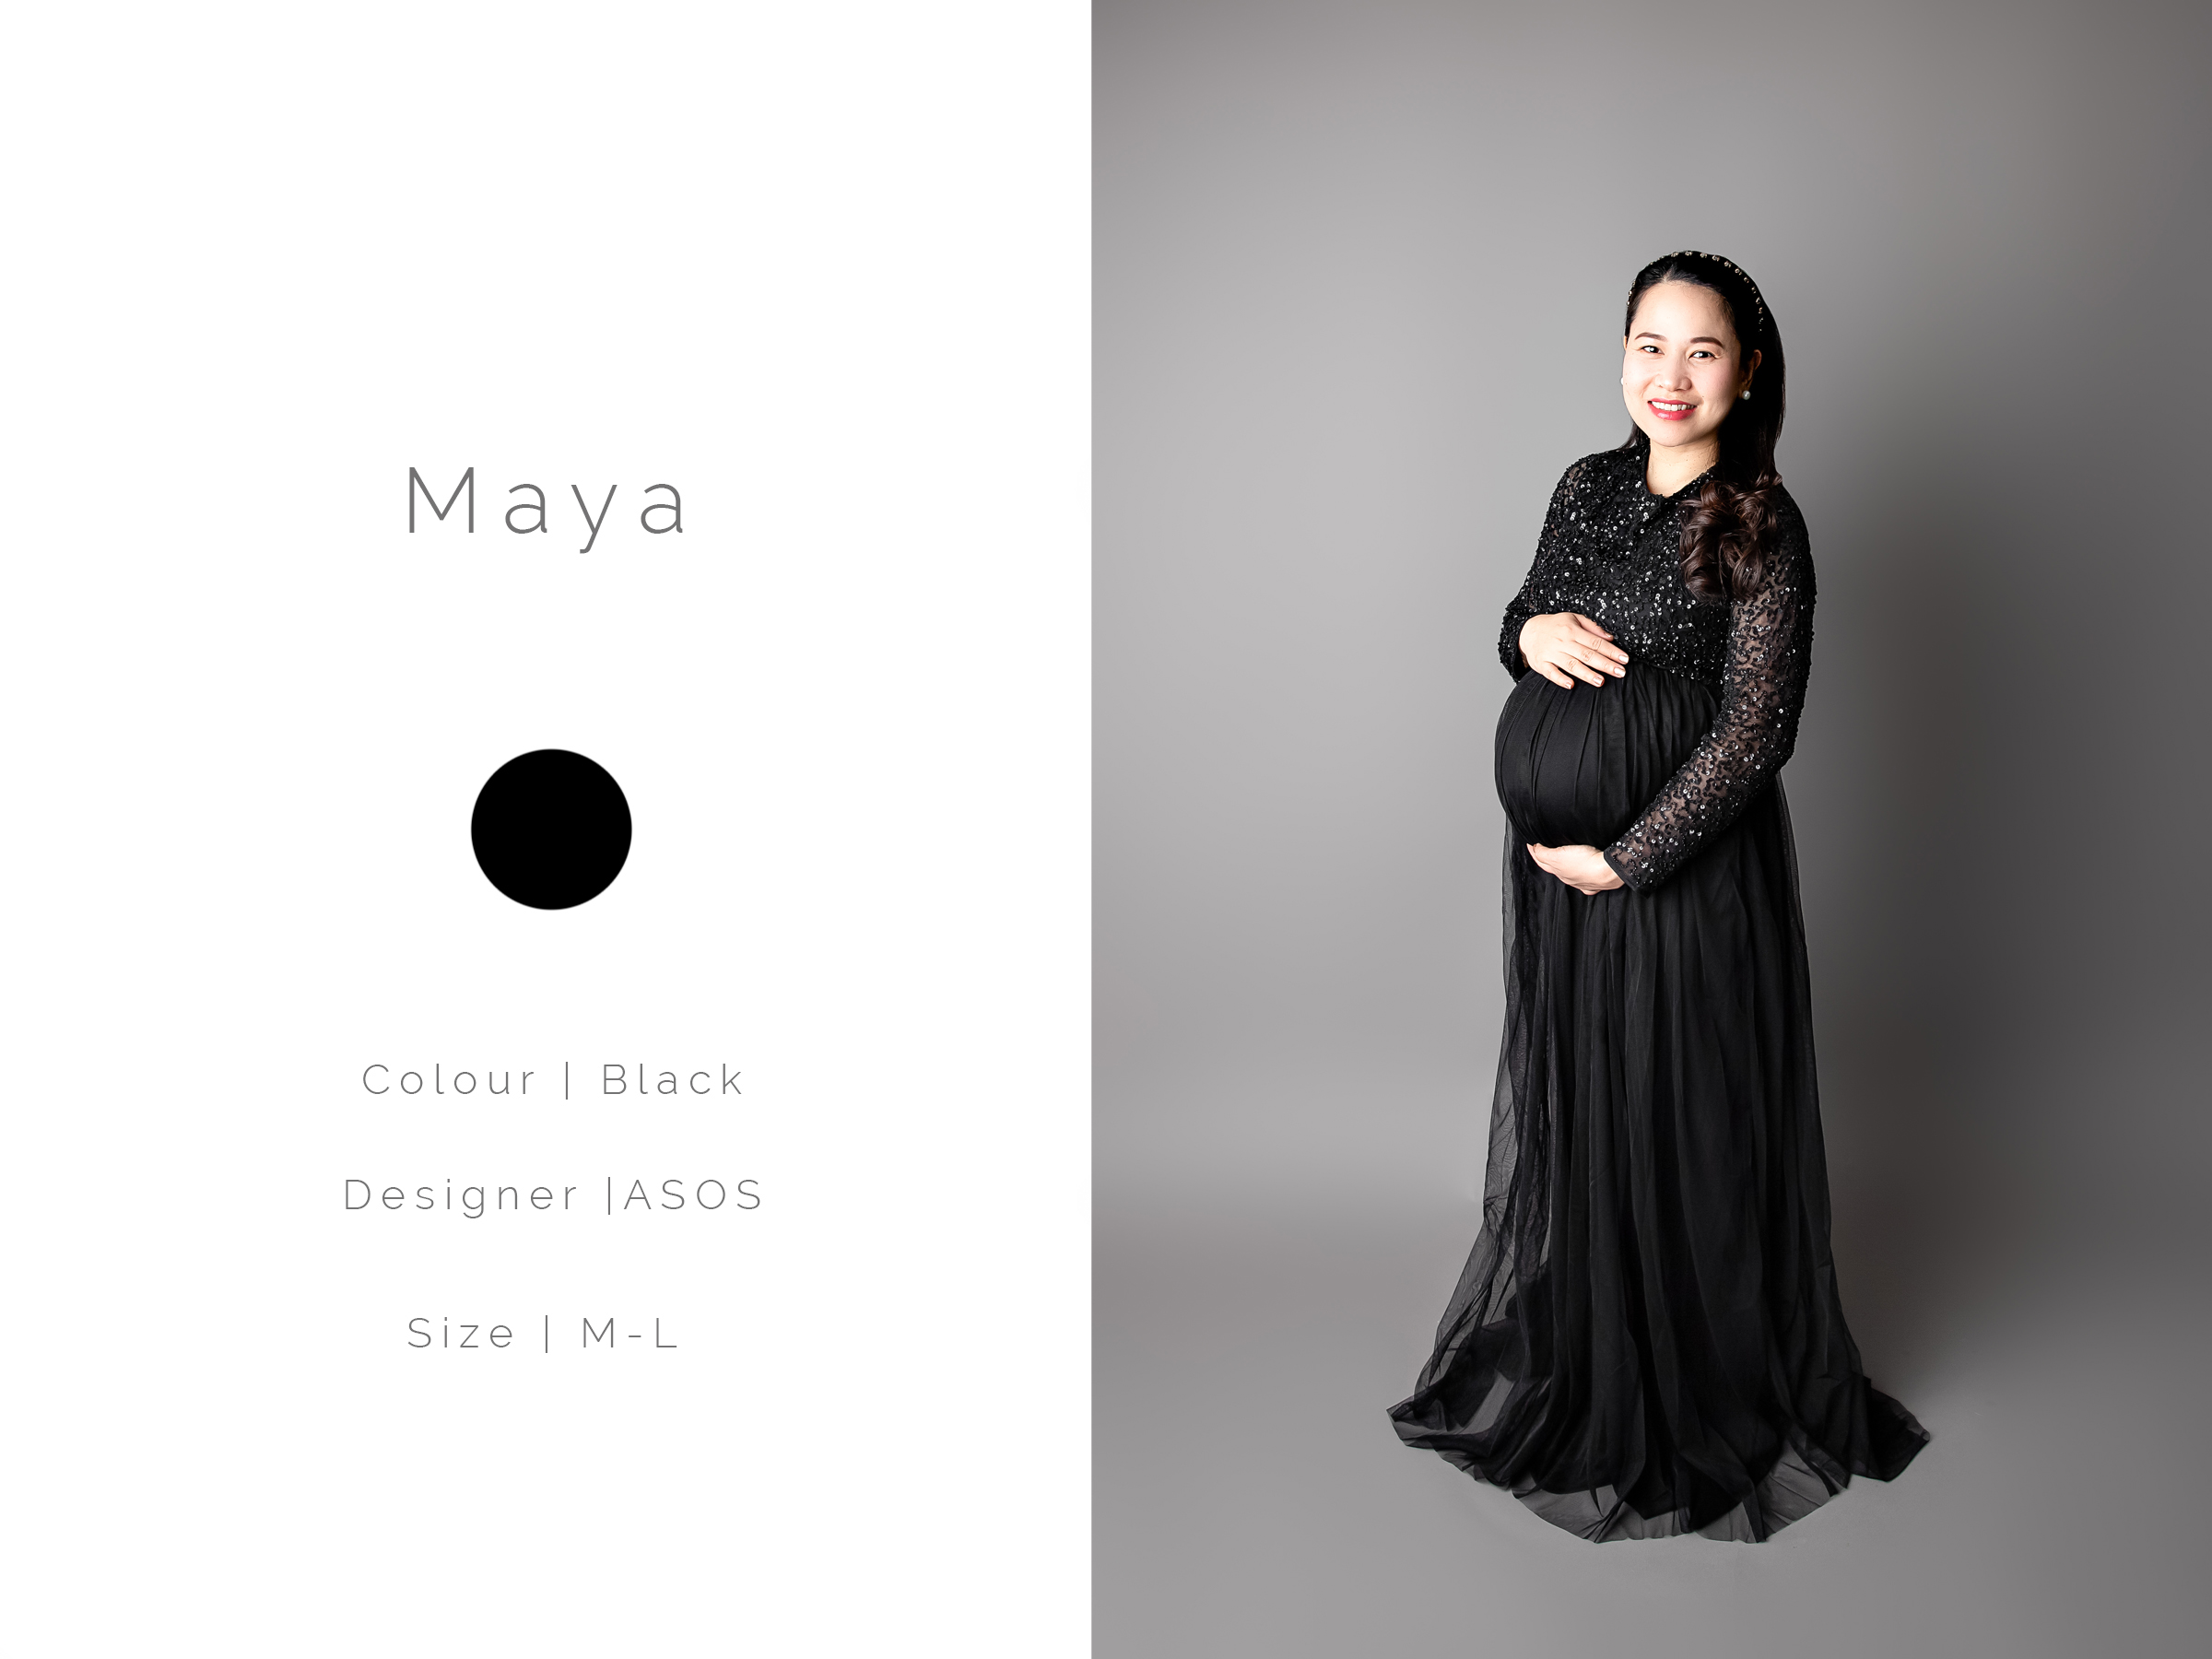 a maternity dress option from Kristin Tiffany Photography